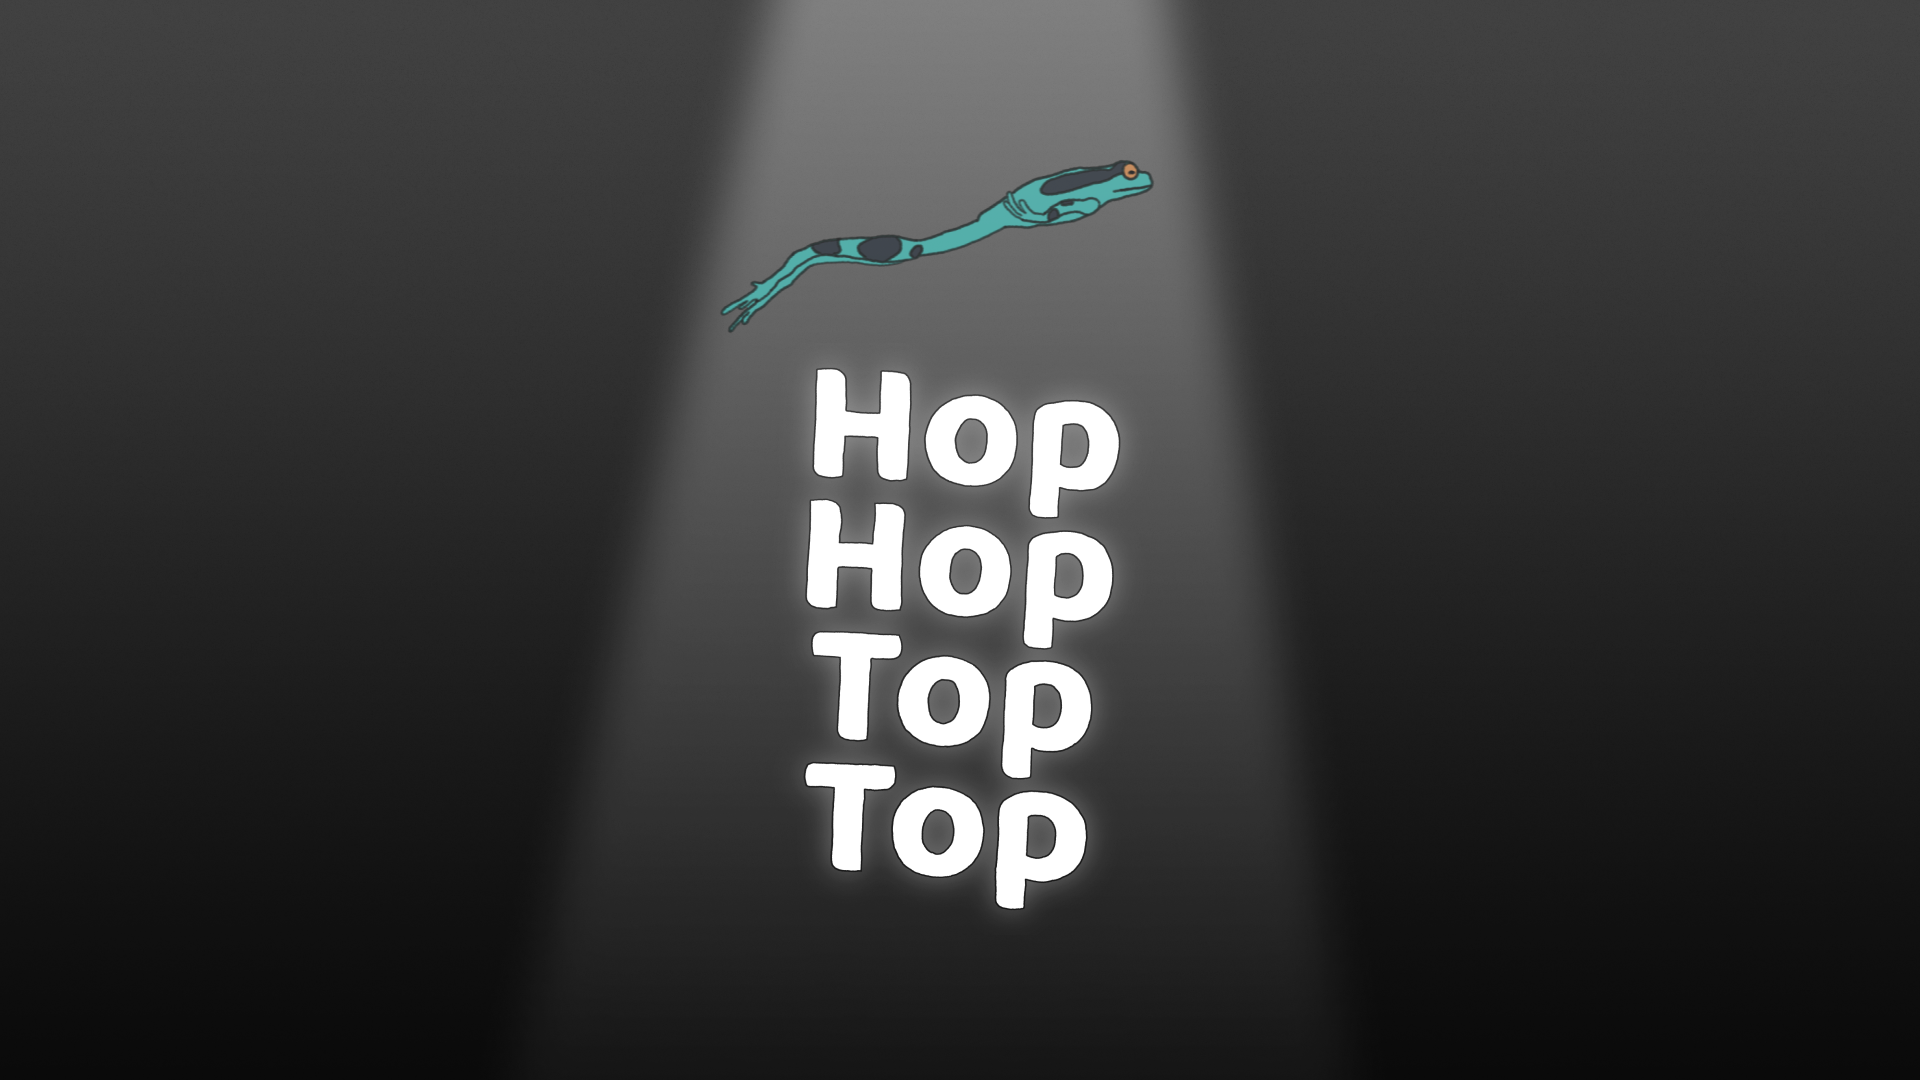 Hop Hop Top Top